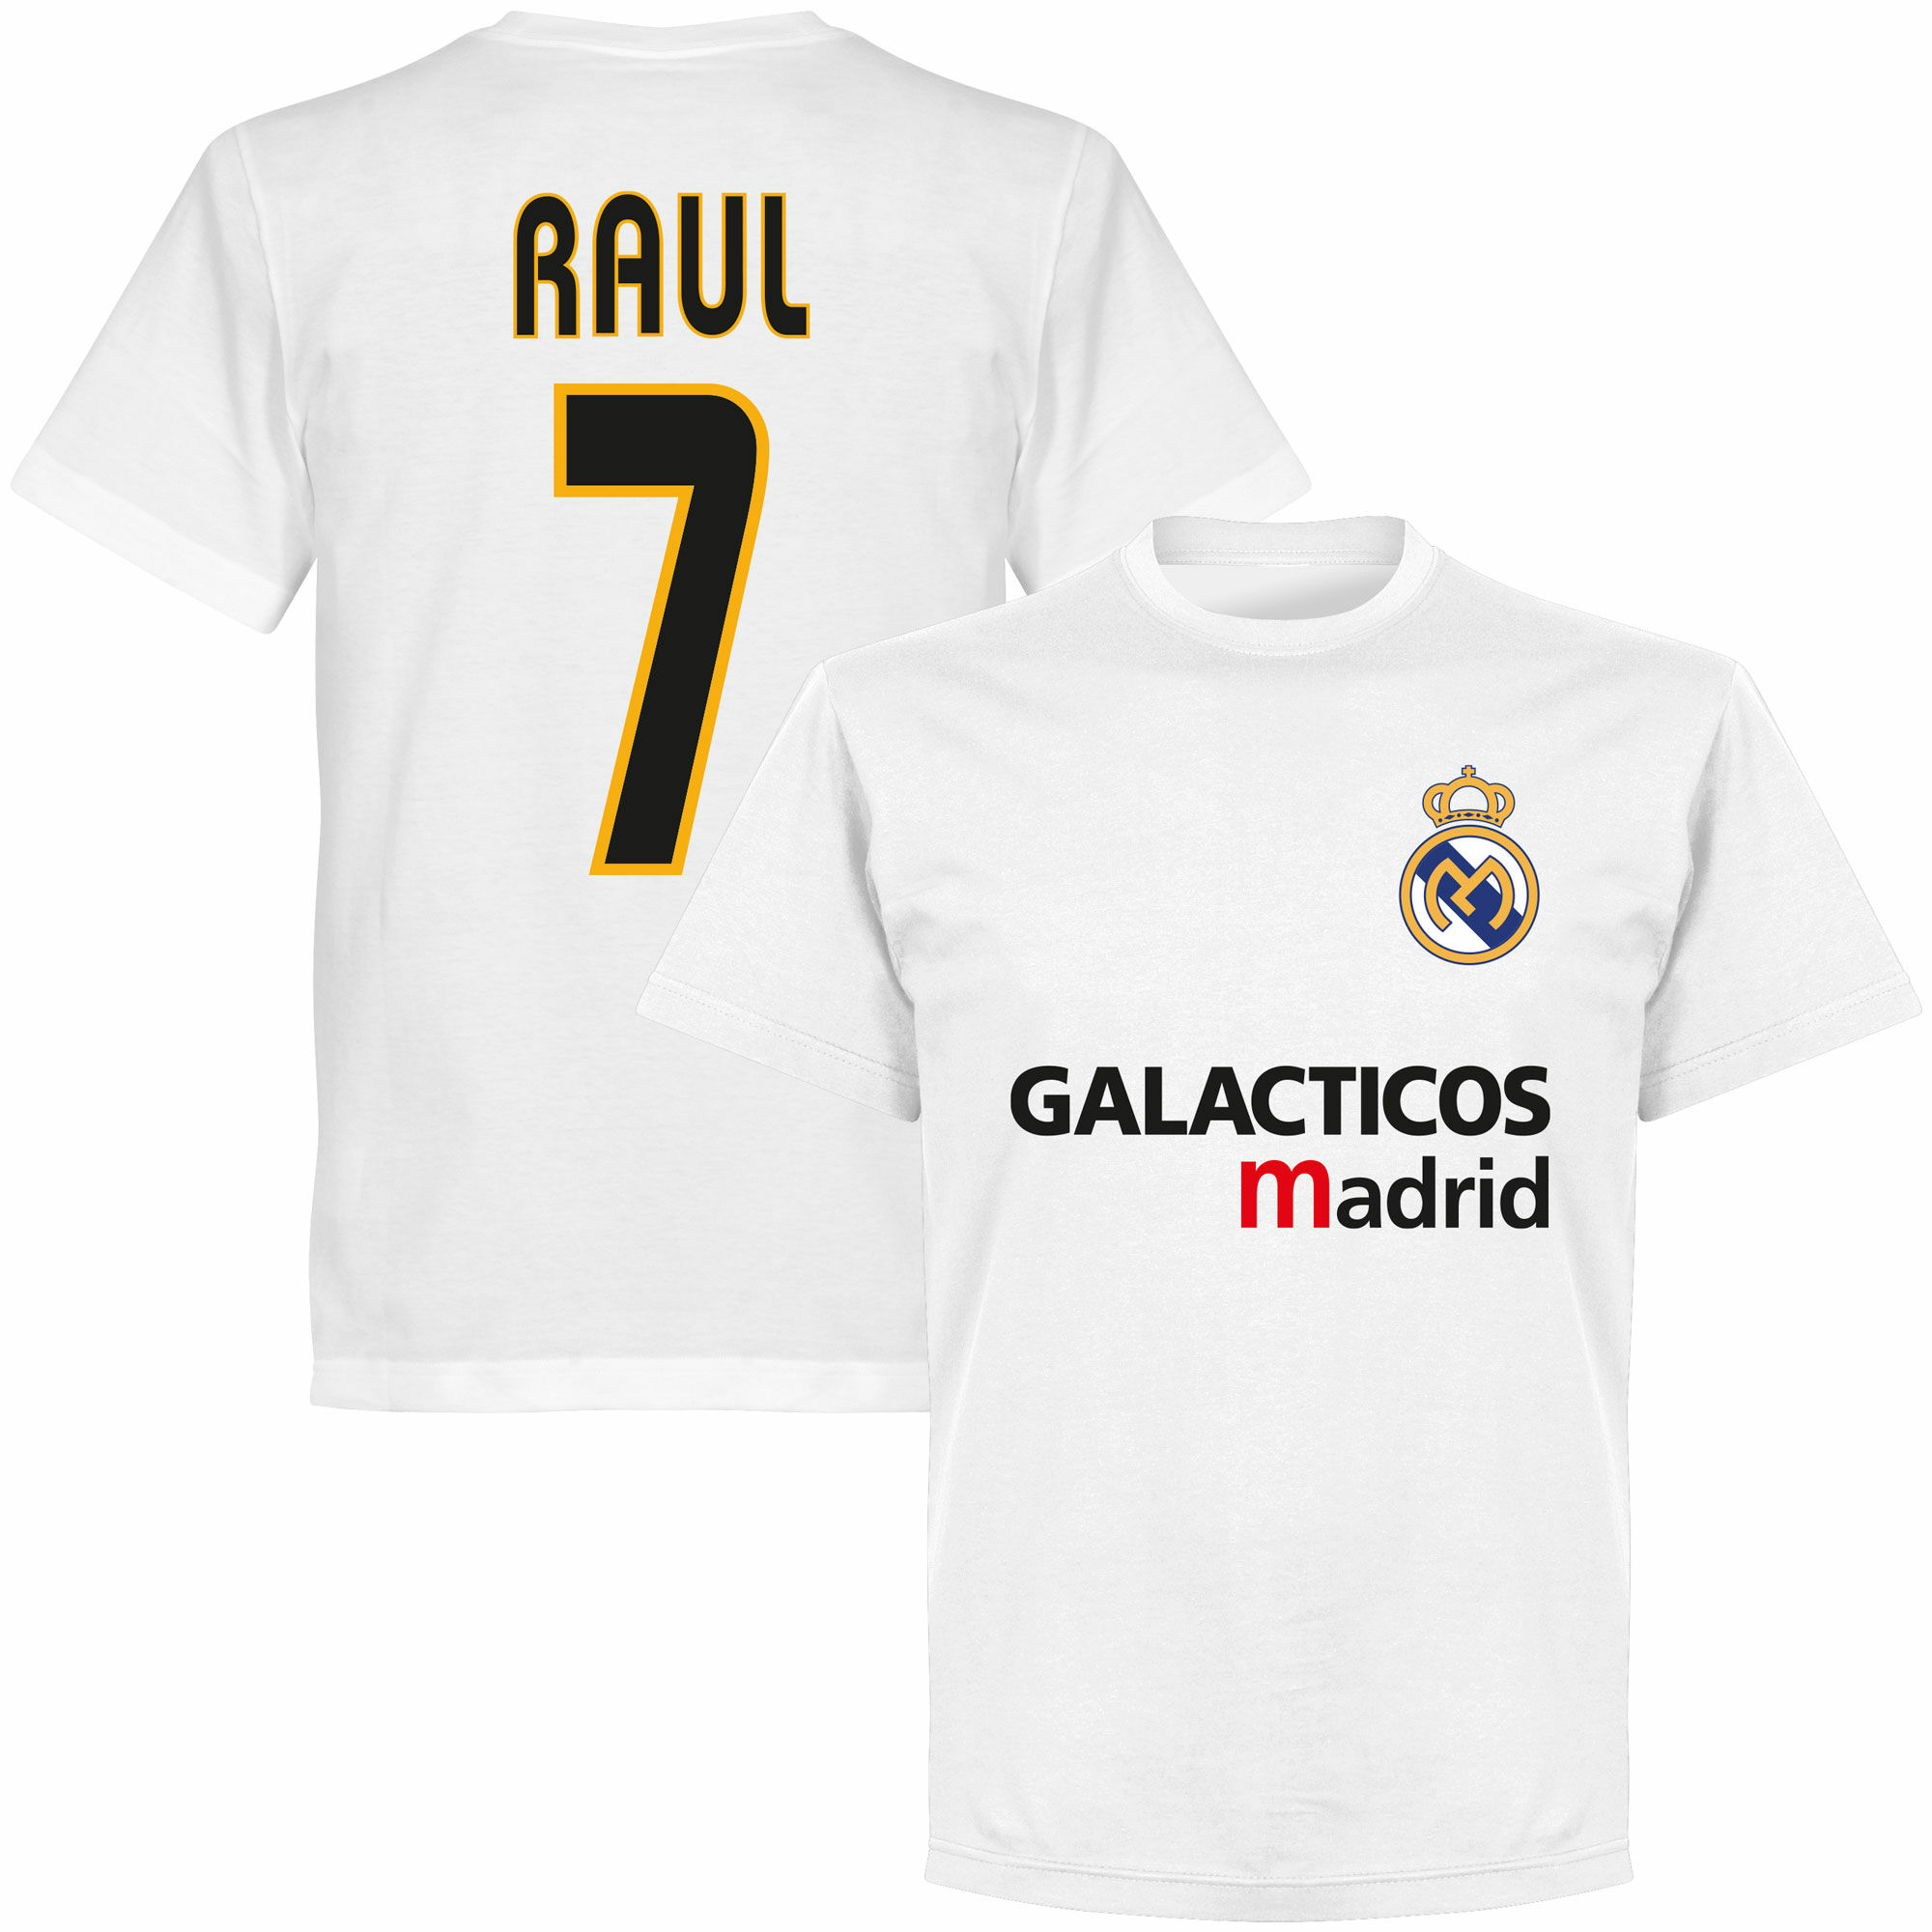 Real Madrid - Tričko "Galácticos Madrid" - bílé, číslo 7, Raúl González